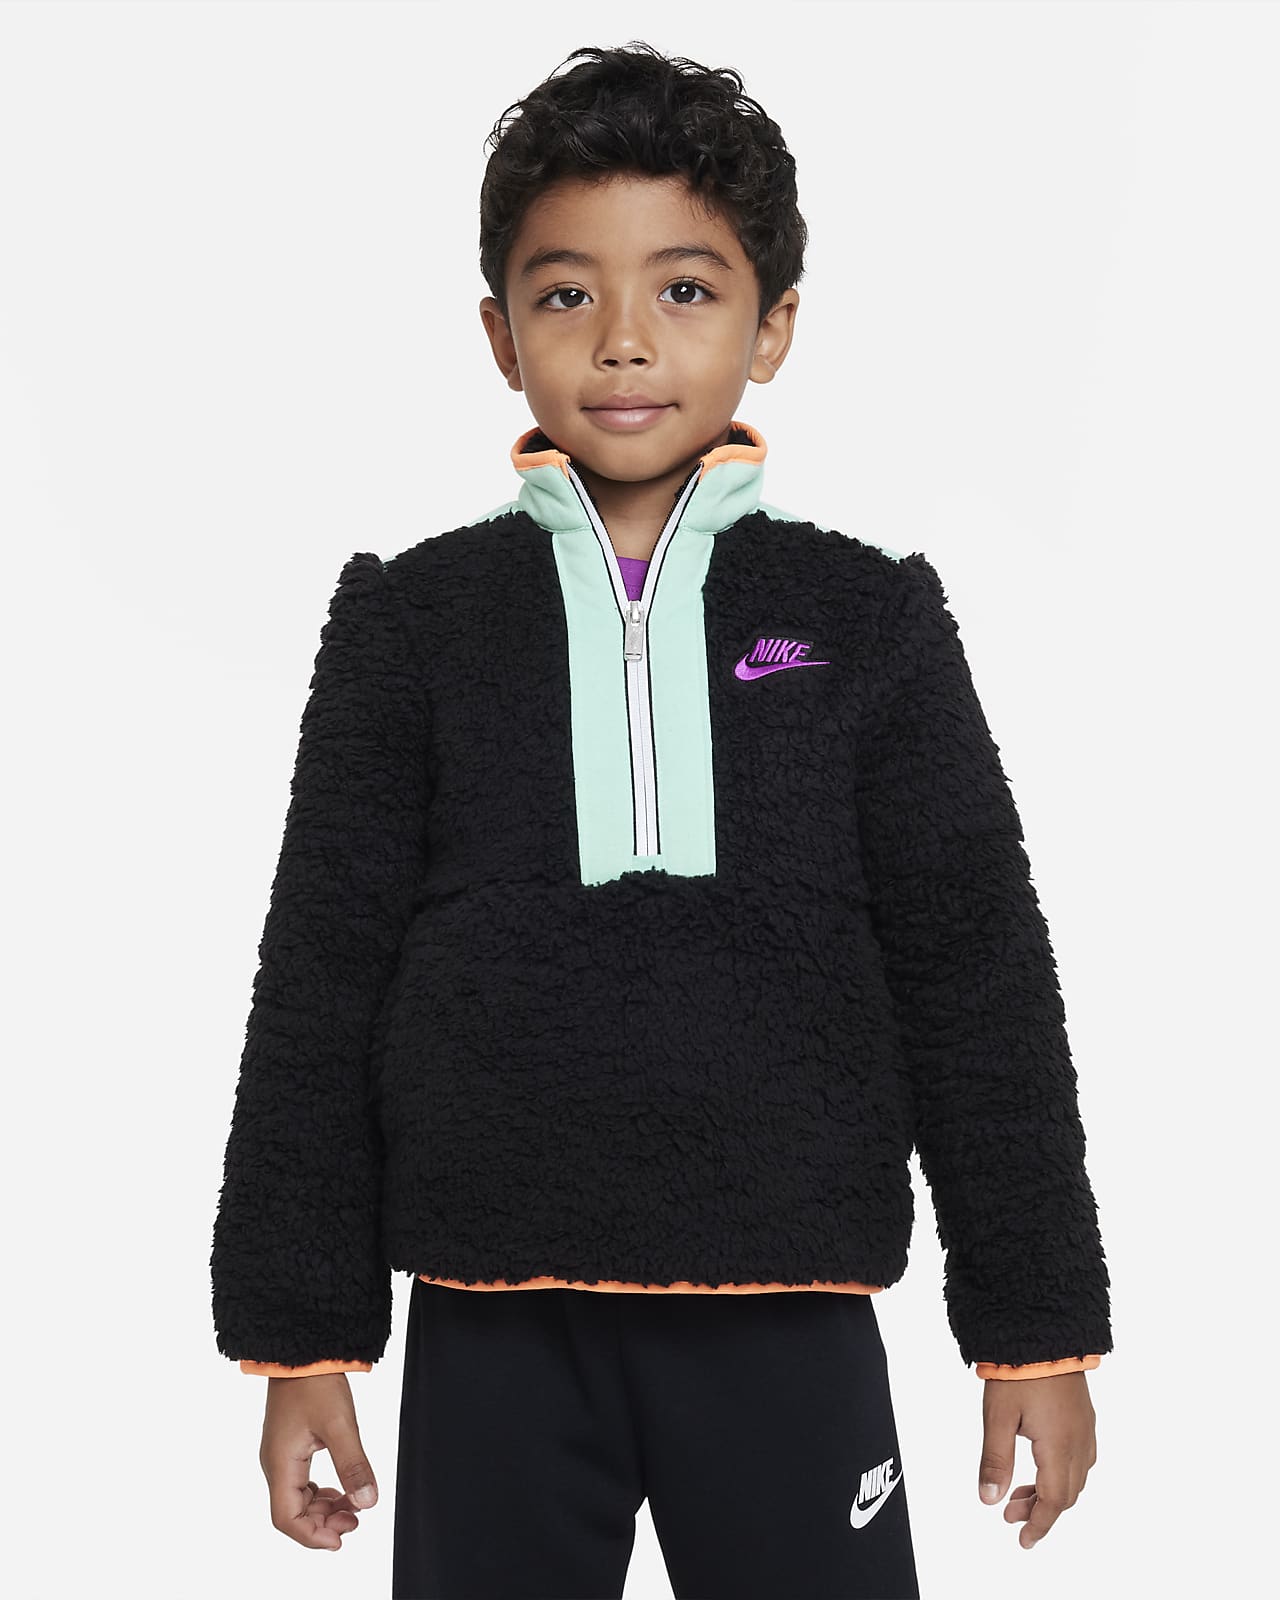 Nike winter sherpa half-zip hoodie in khaki | ASOS | Mens fleece jacket,  Fleece jacket outfit, Half zip outfit men